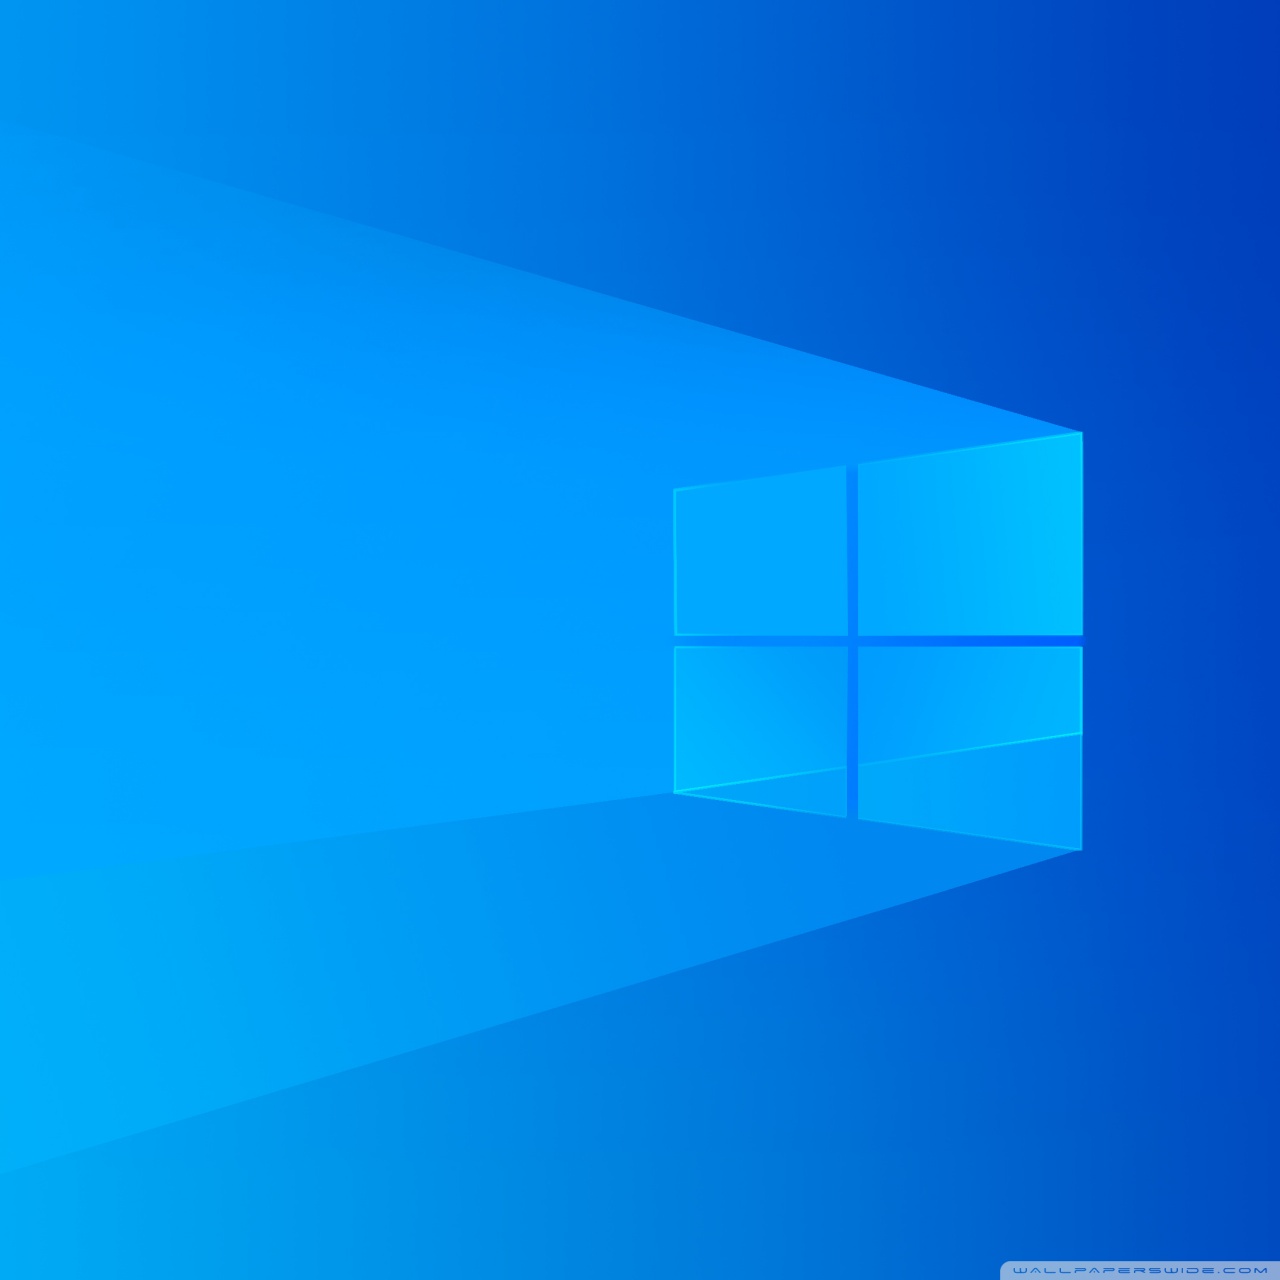 Flat New Windows 10 Ultra HD Desktop Background Wallpaper for ...